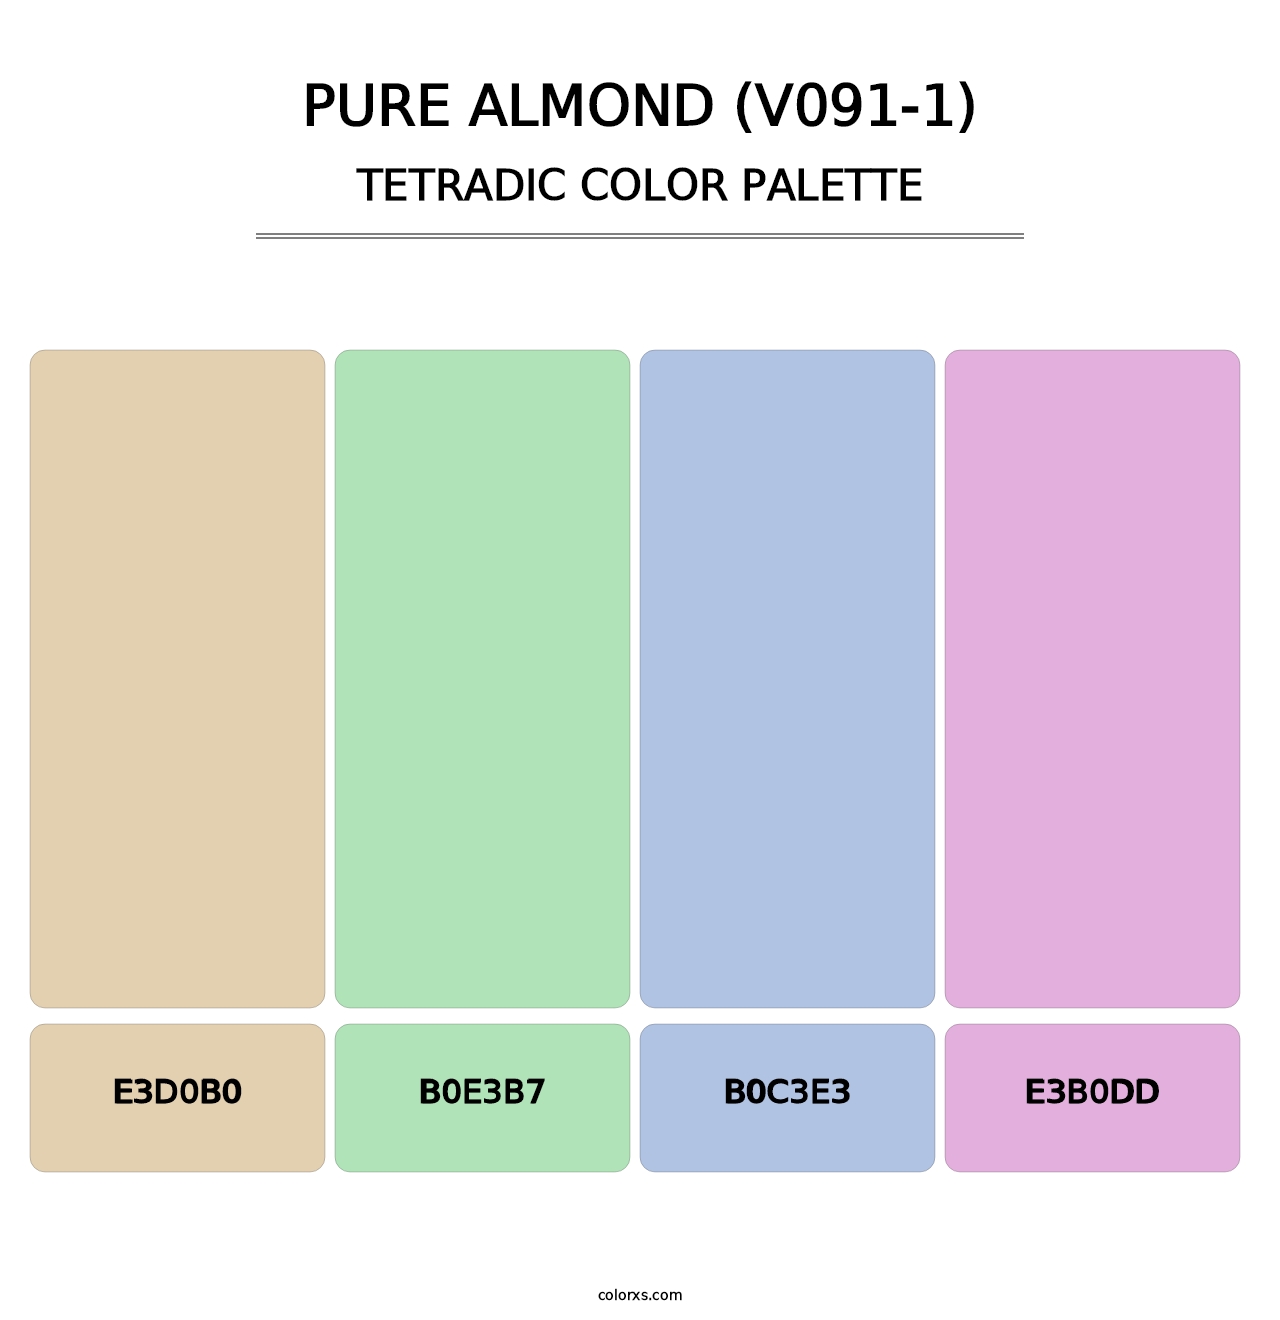 Pure Almond (V091-1) - Tetradic Color Palette